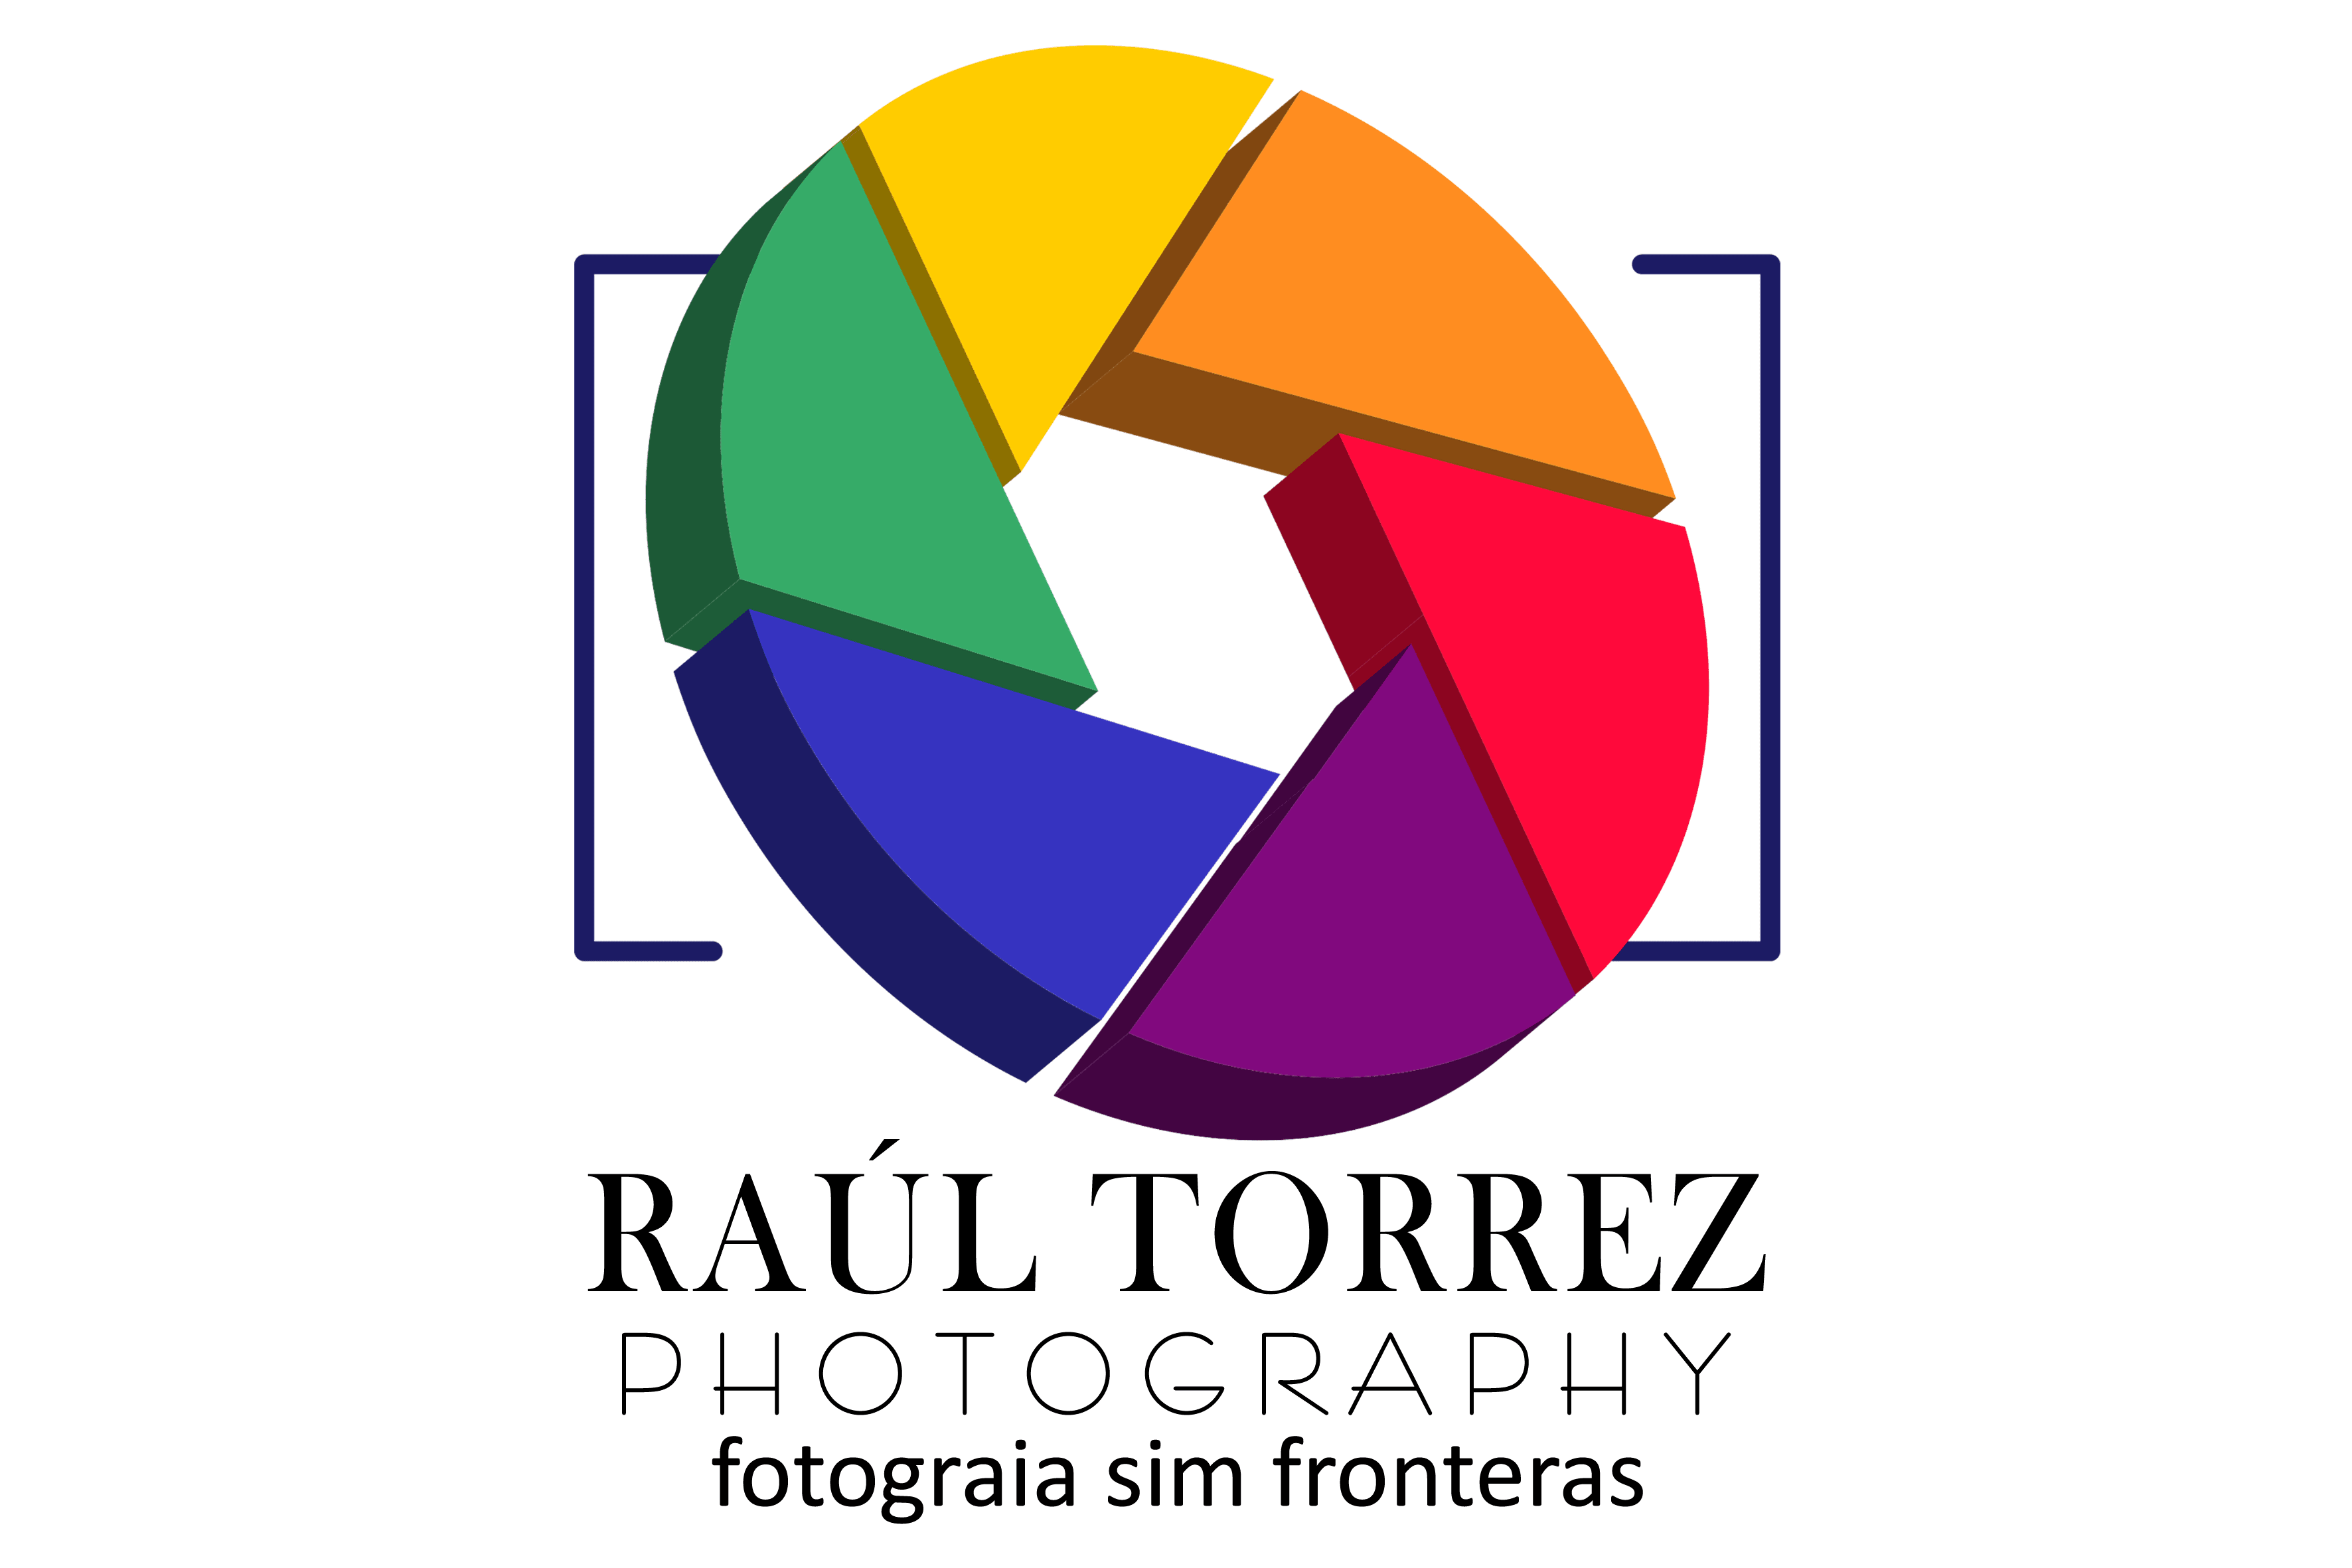 Raul Torrez Photography